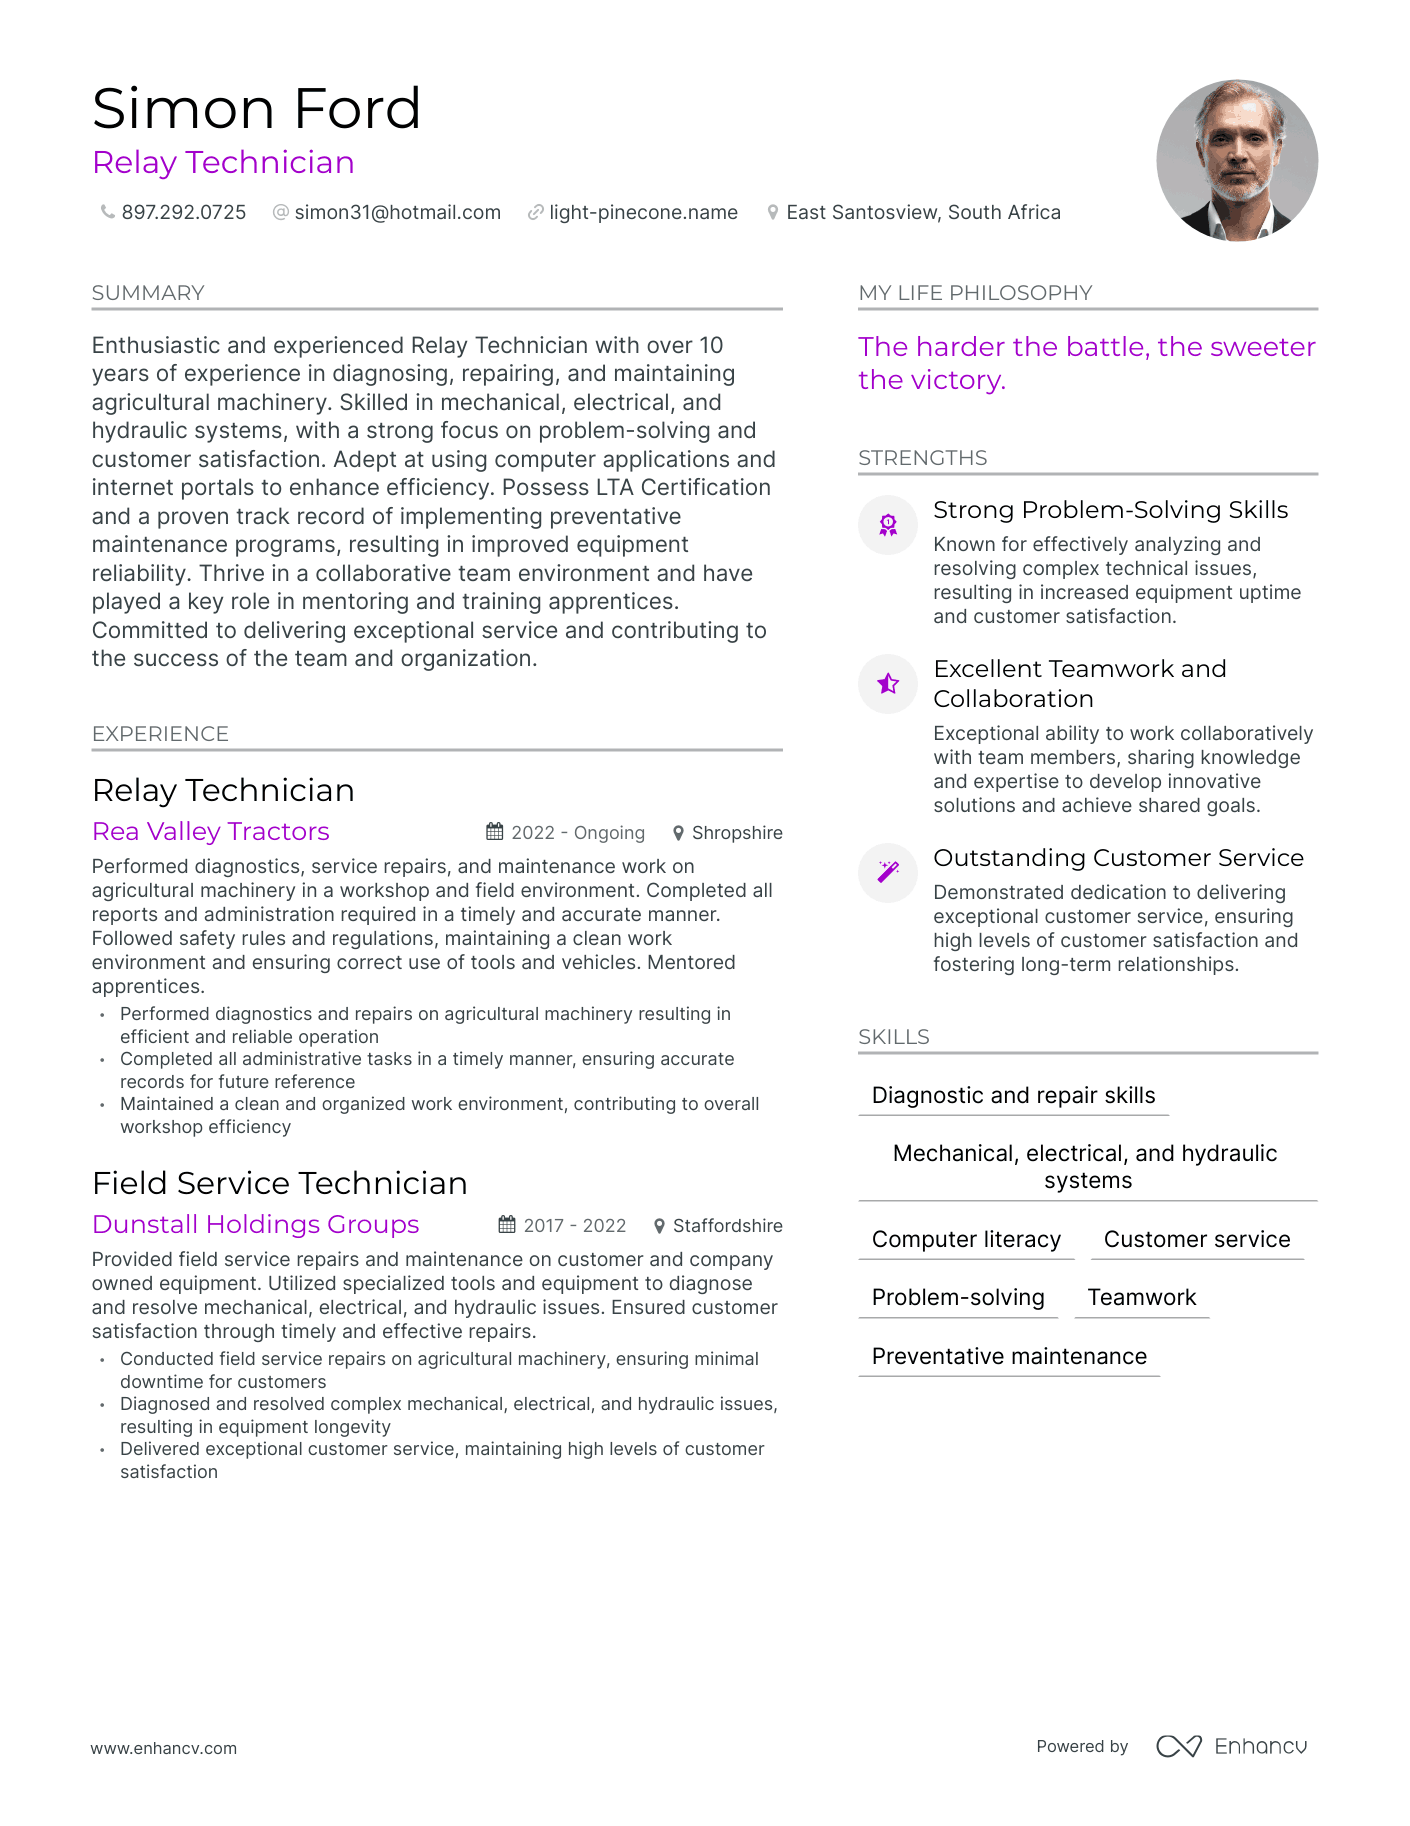 Relay Technician resume example